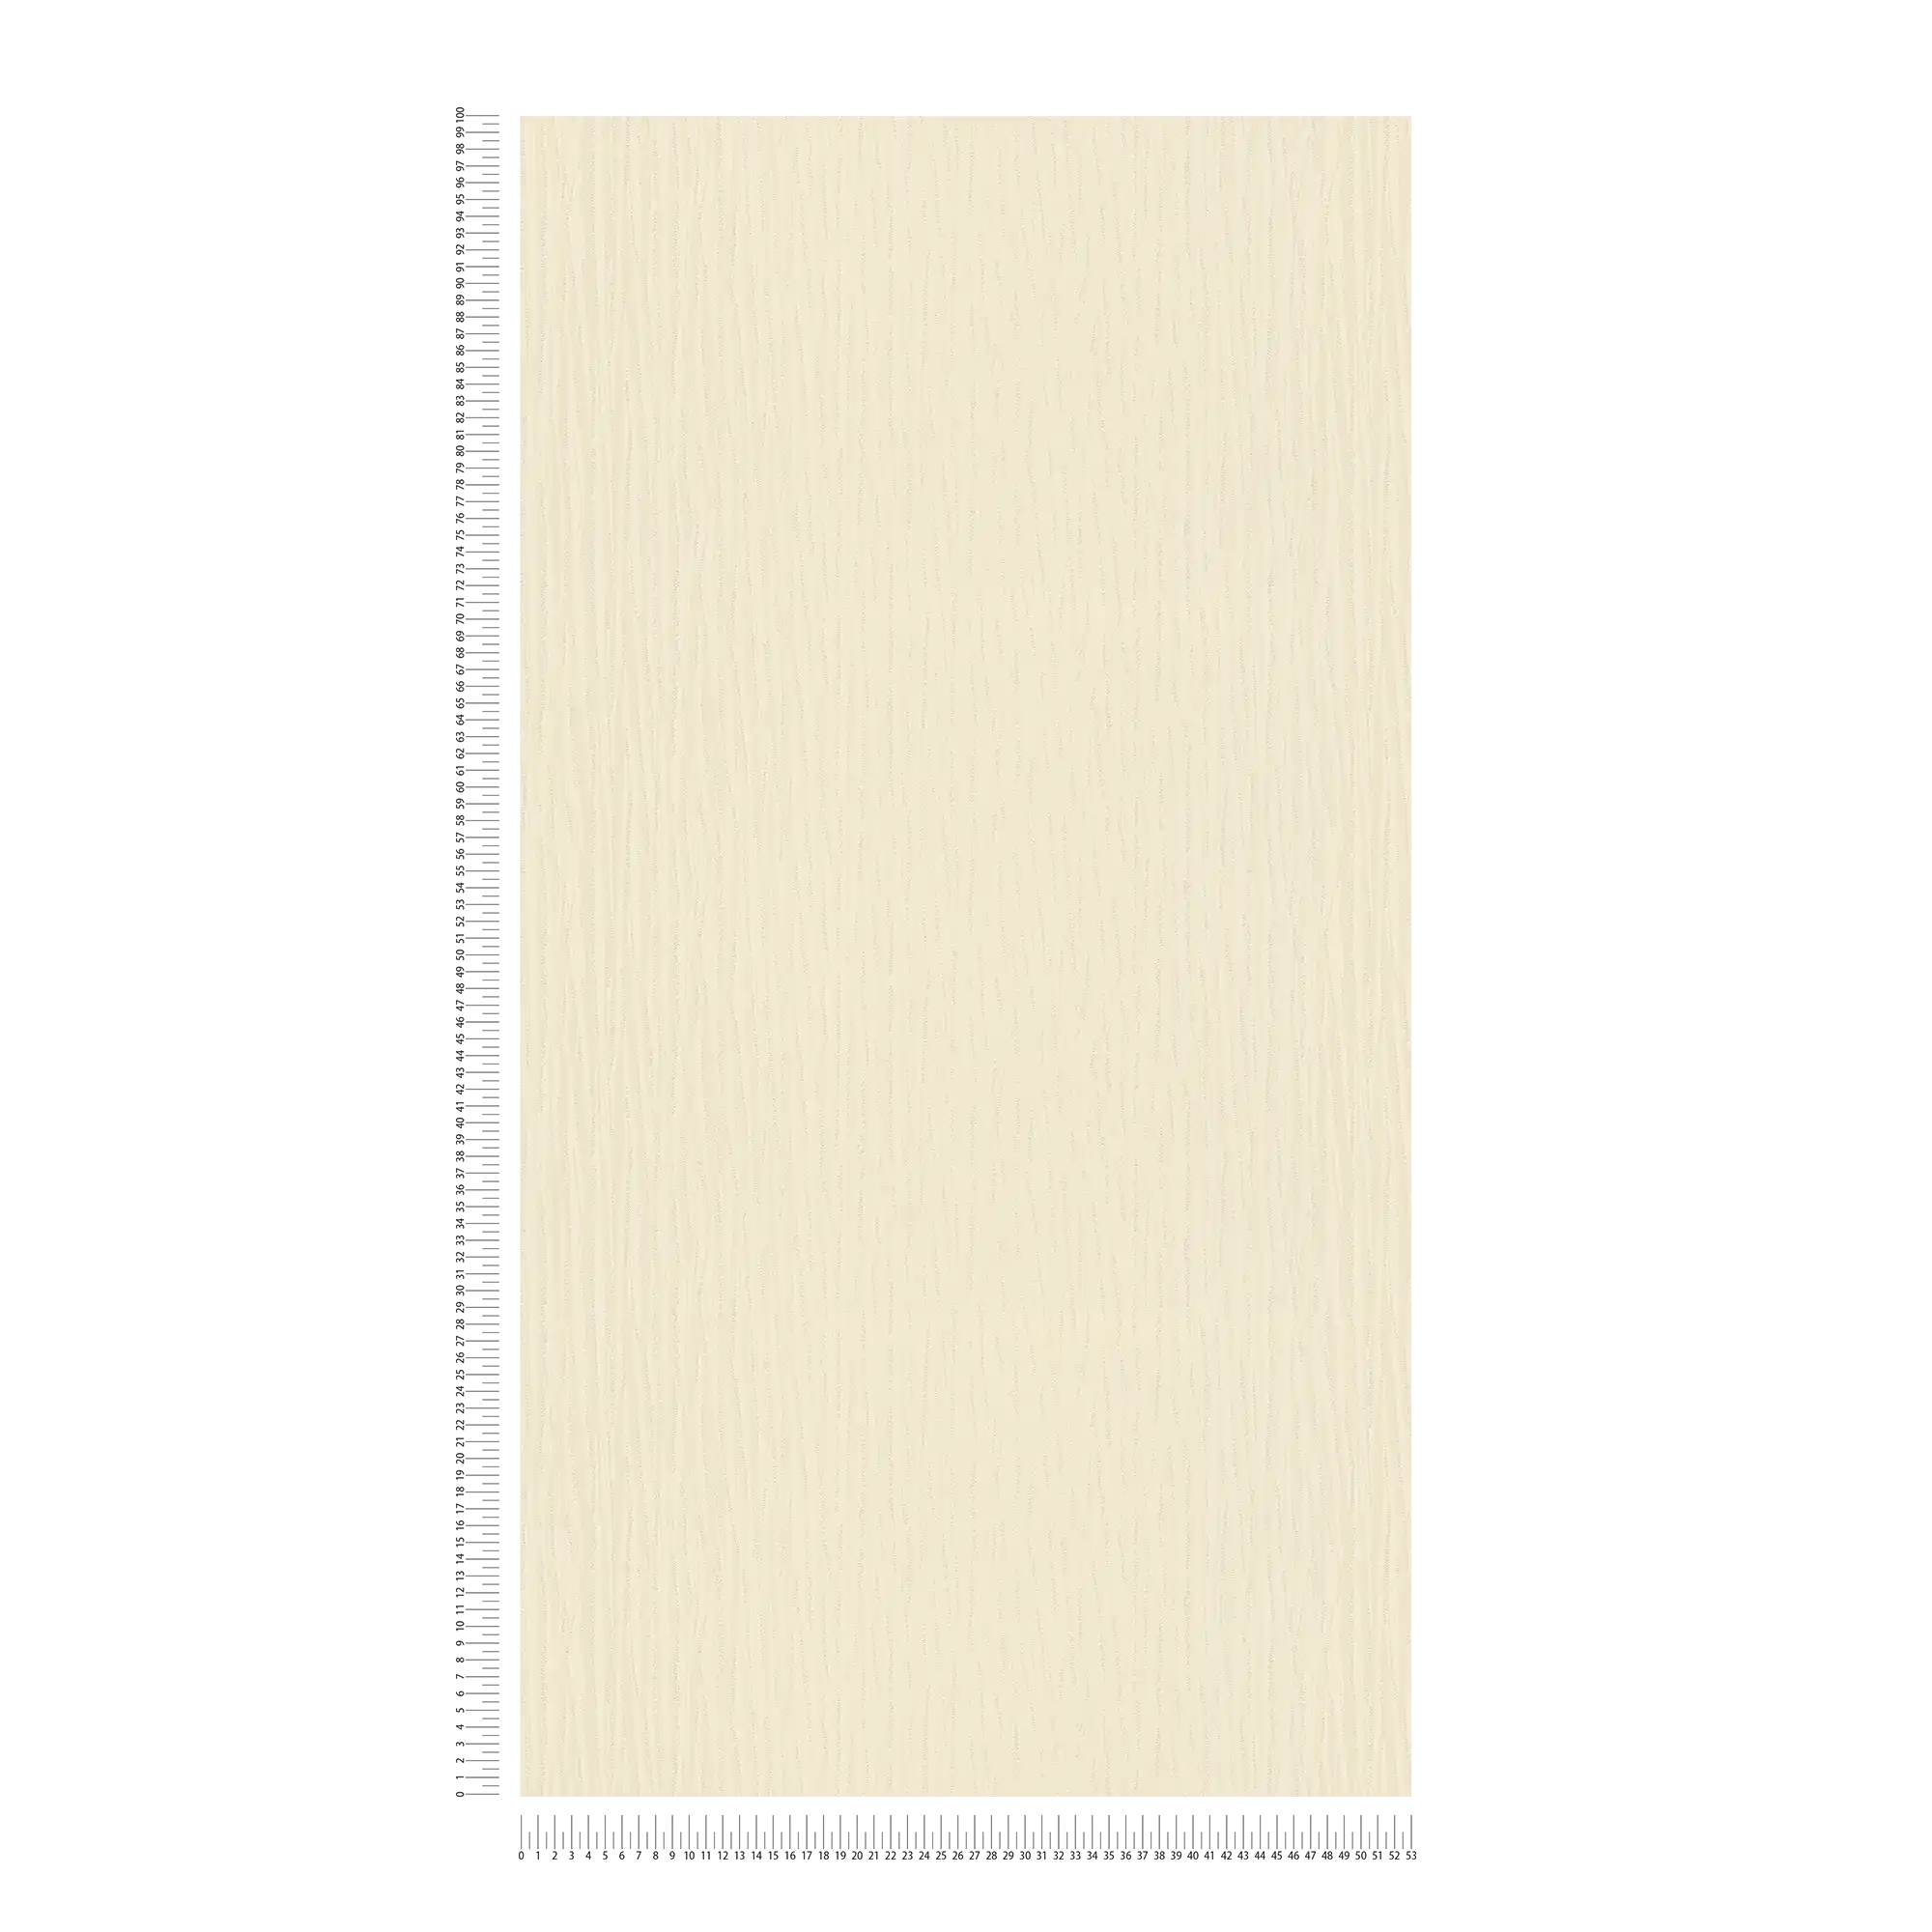             Carta da parati in tessuto non tessuto giallo crema con lucentezza metallica e motivo a colori
        